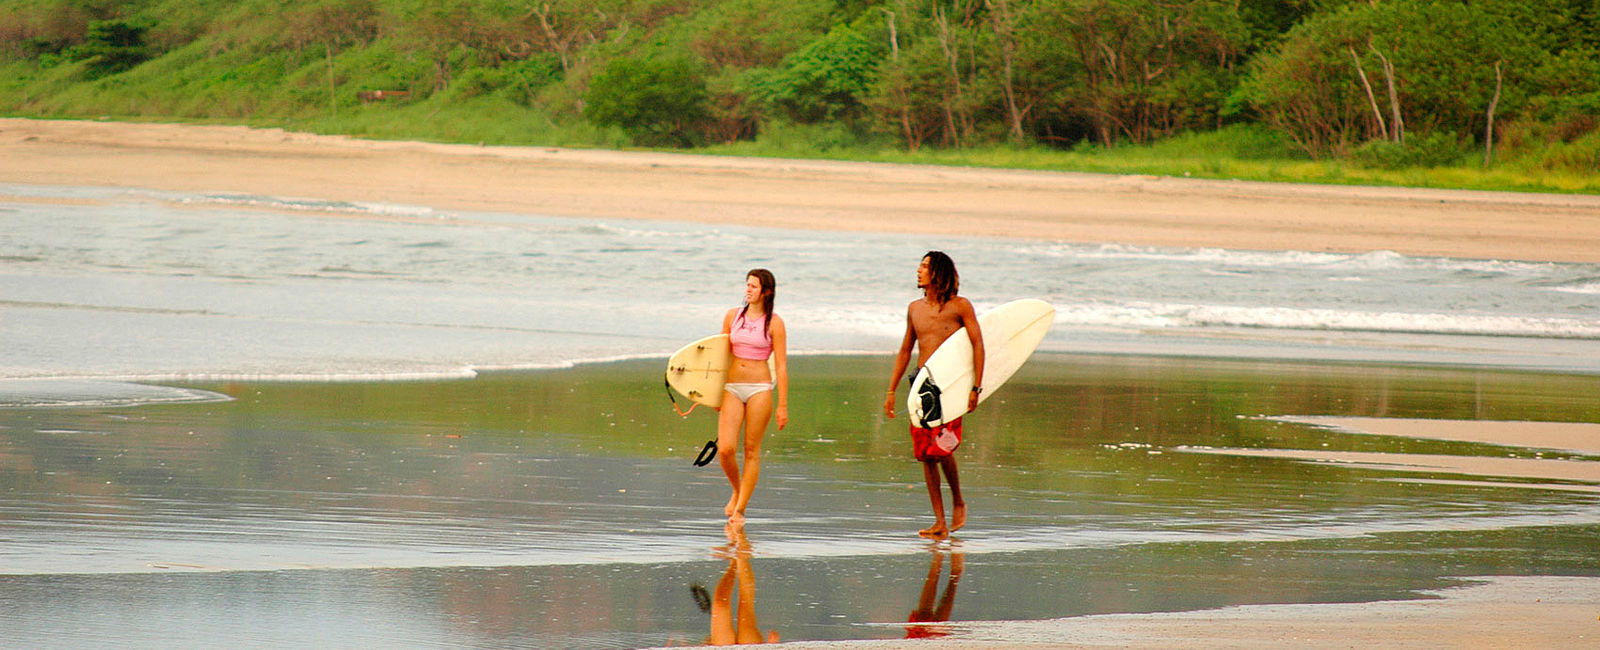 SURFER'S PARADISE - COSTA RICA
 Guancaste - Wo Costa Rica Wellen schlägt 